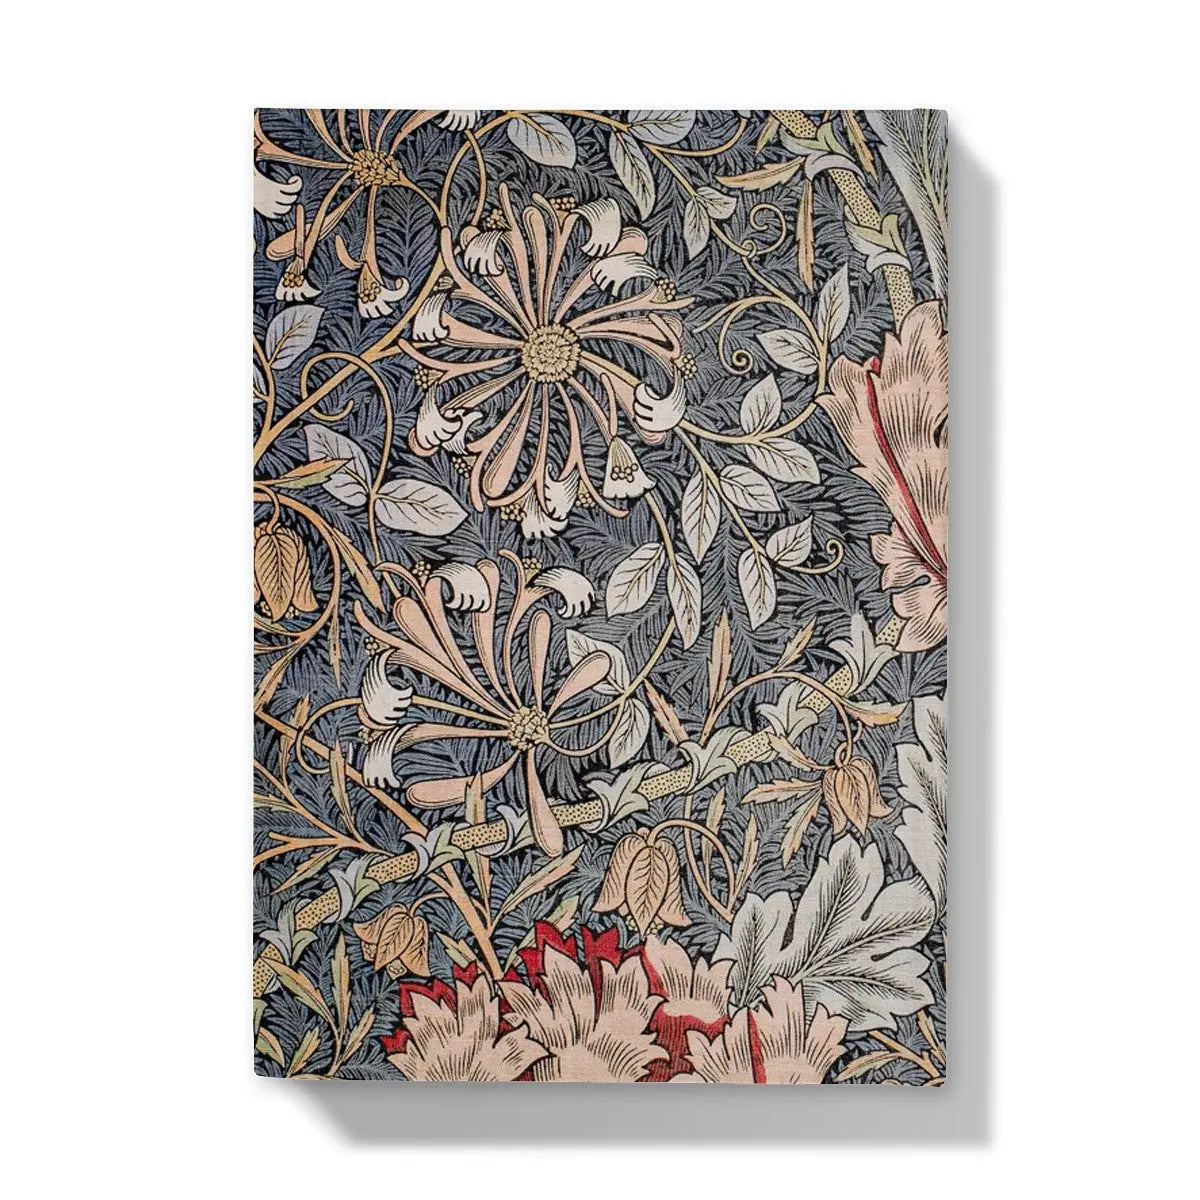 Honeysuckle By William Morris Hardback Journal - Notebooks & Notepads - Aesthetic Art